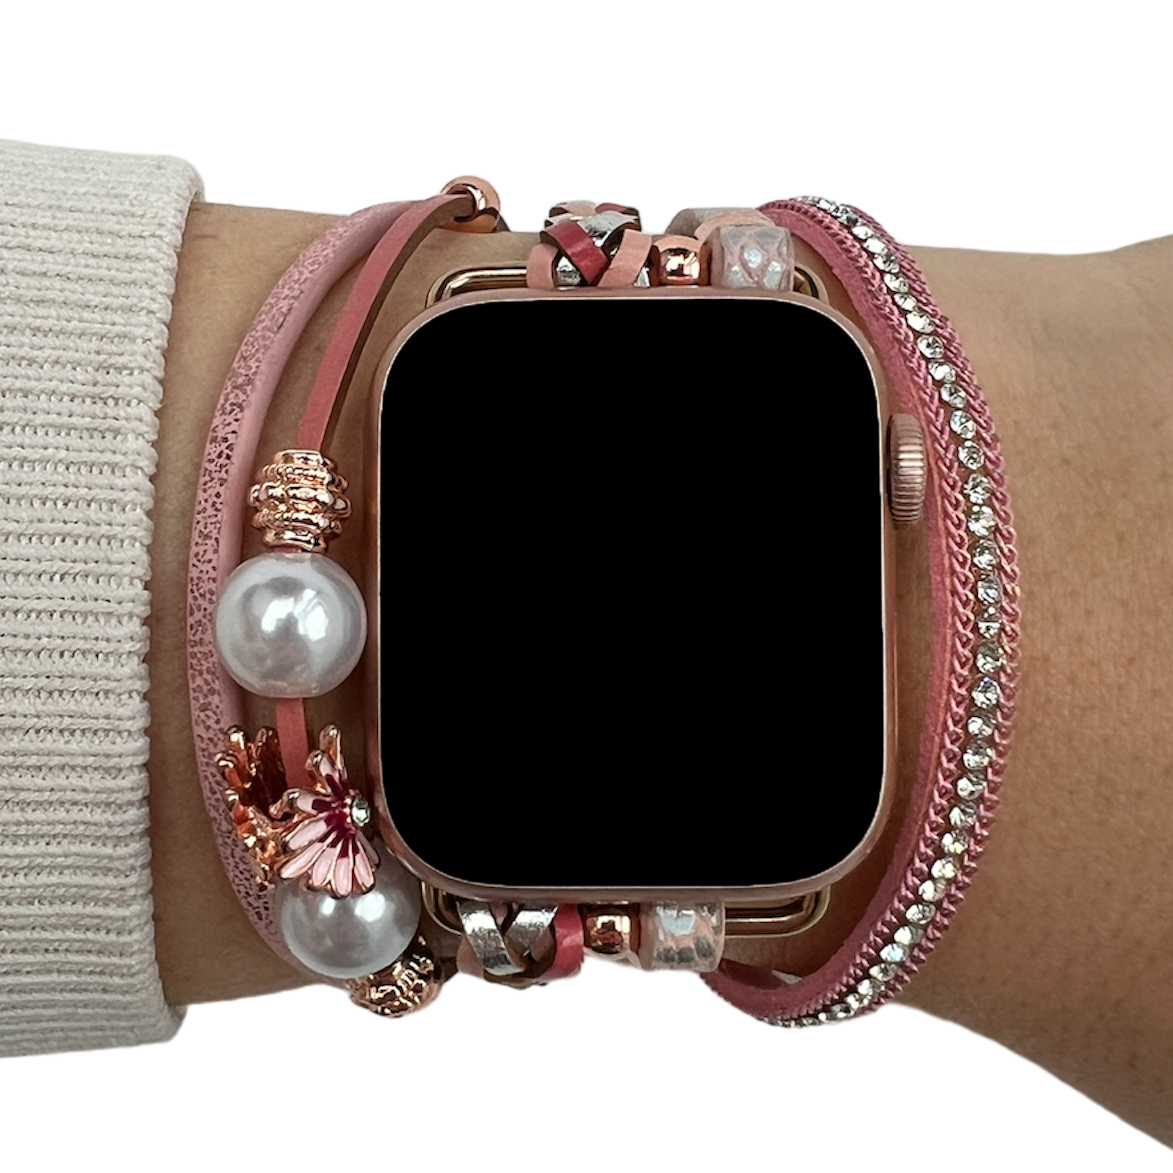 Apple Watch sieraden band - Liz roze